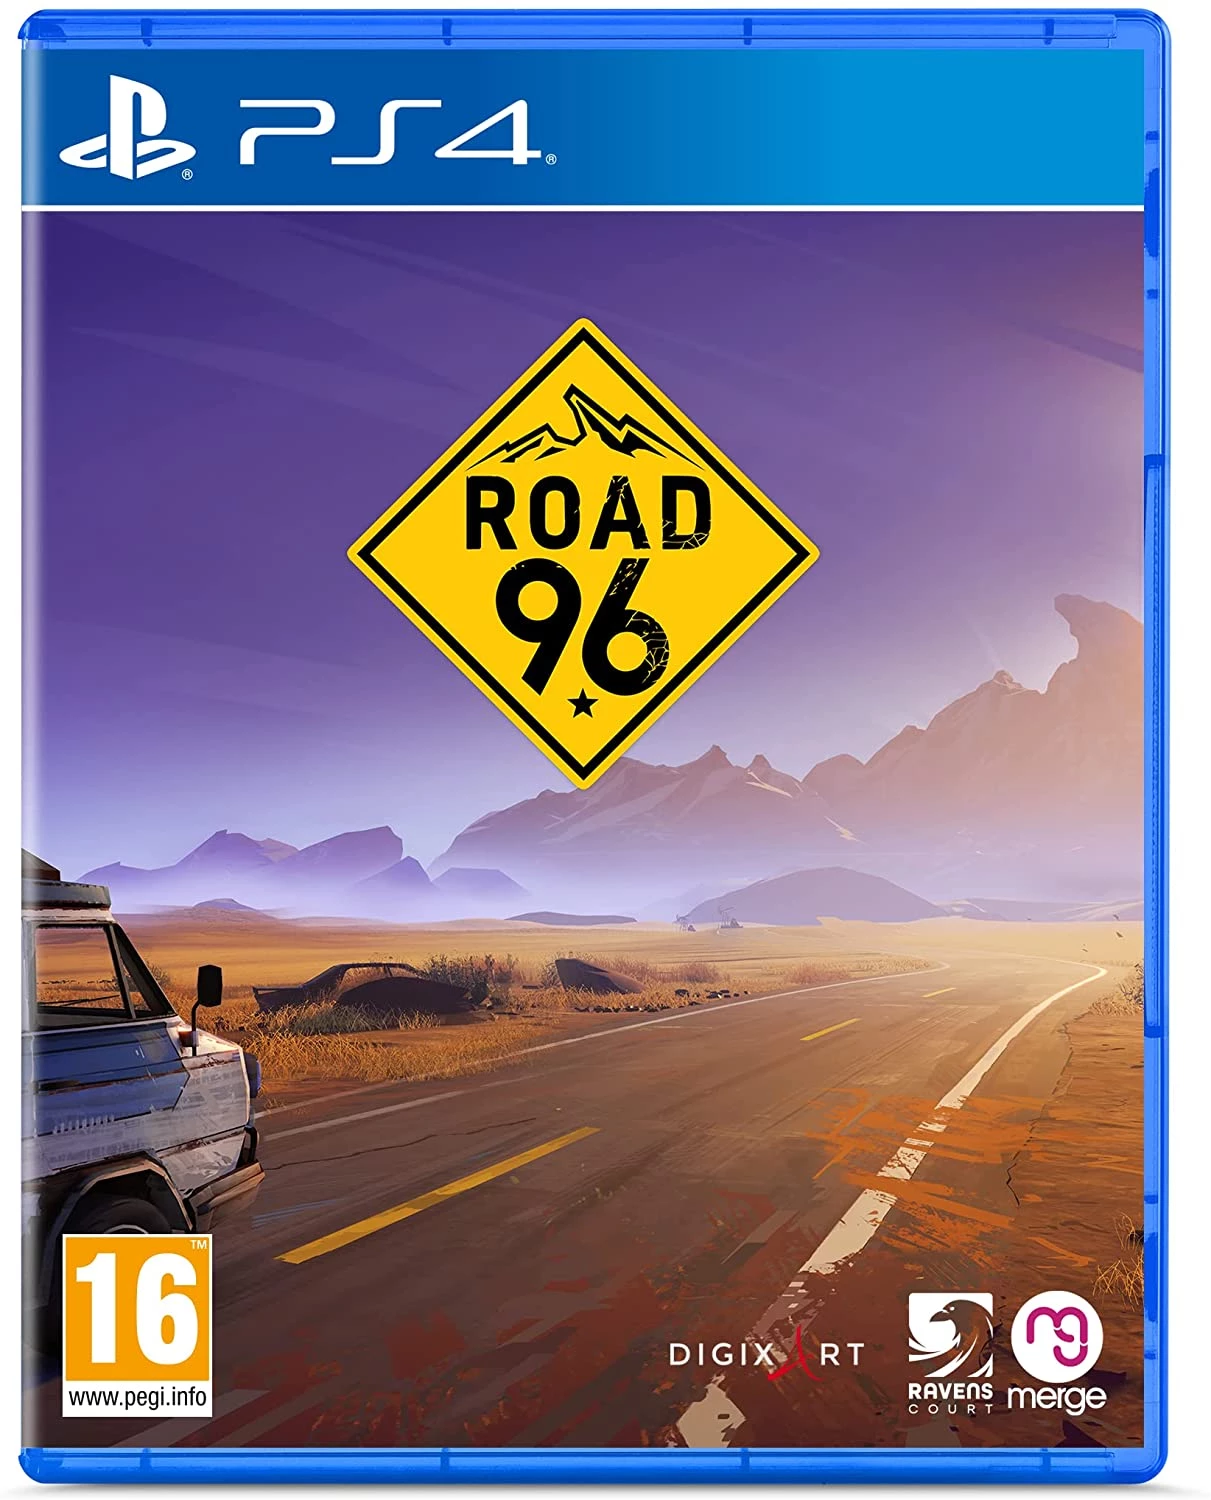 Road 96 (PS4), Merge Games 